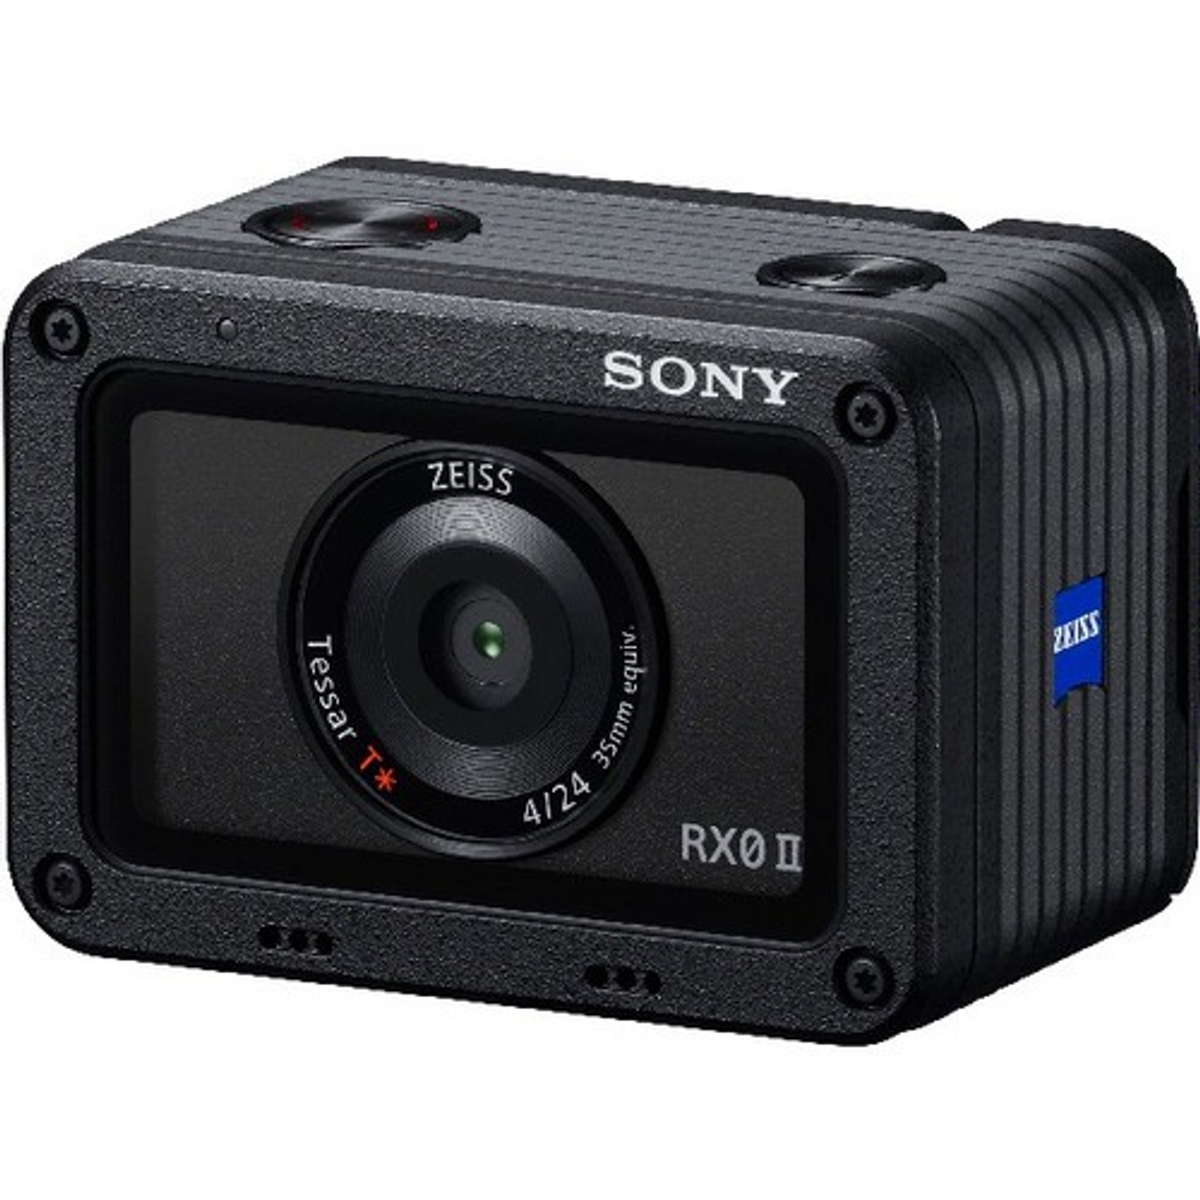 Digitalkamera SONY GRIP Schwarz, TFT-LC, DSC-RX + 0 SHOOTING VCT-SGR1 Zoom, opt. M2 WLAN- Nein